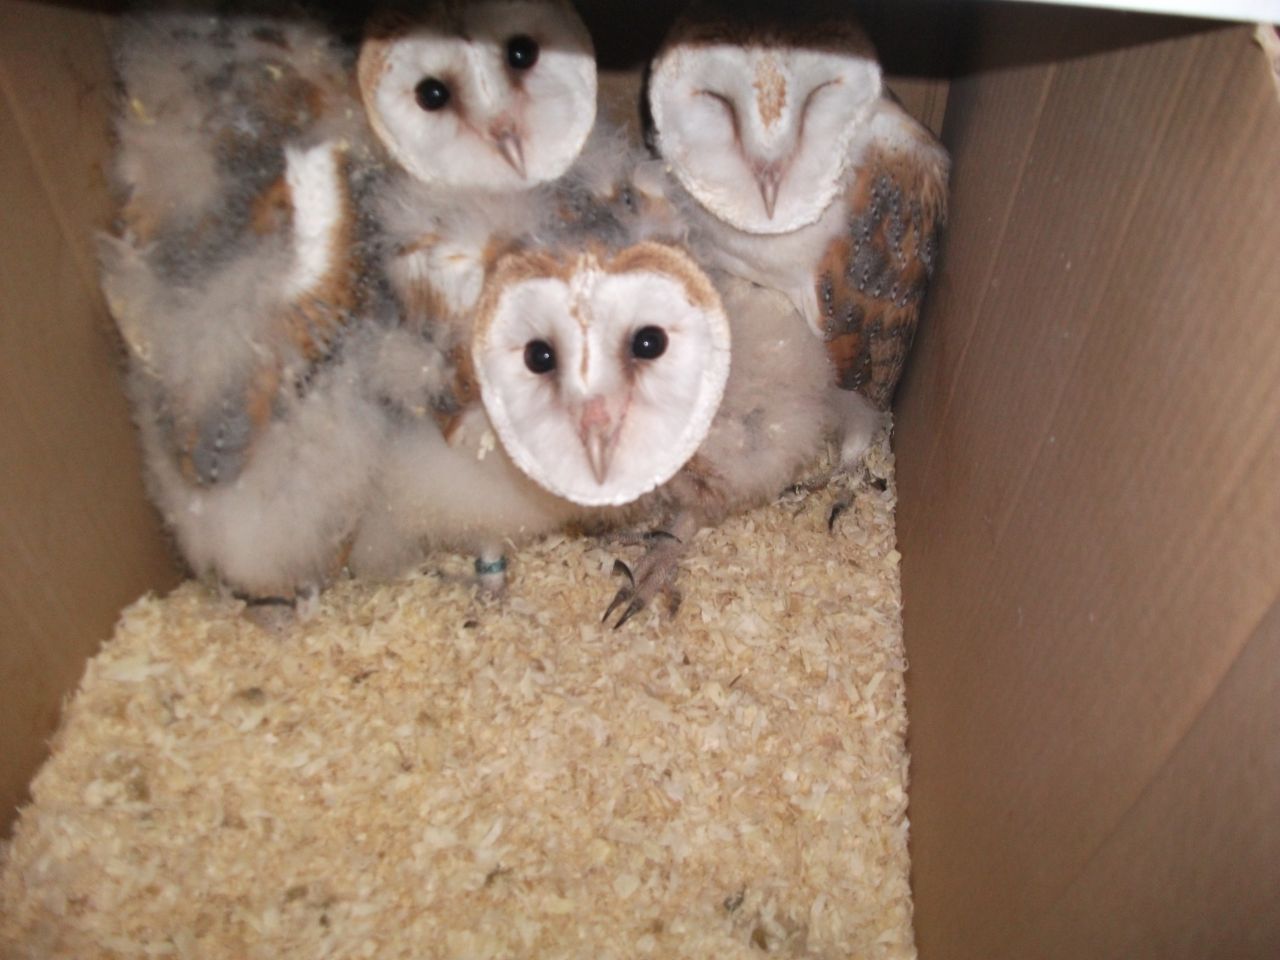 stuffed owls for sale